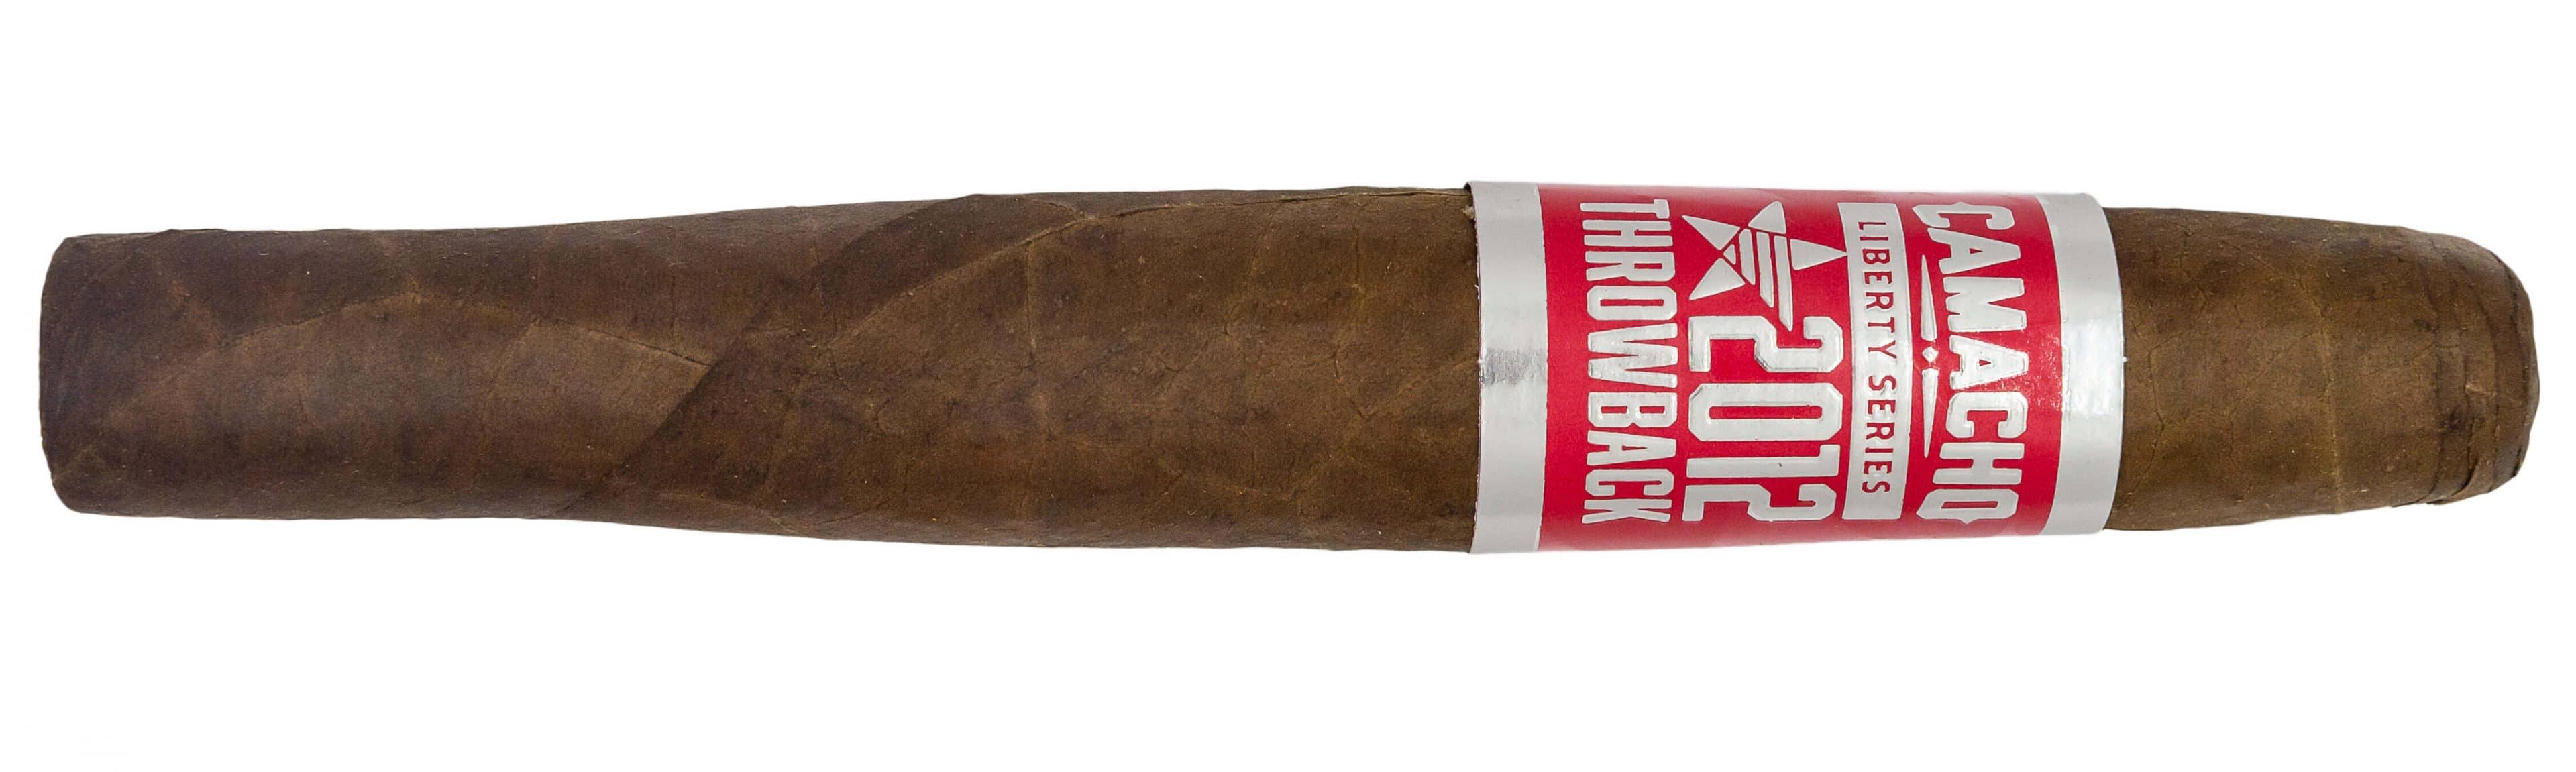 Blind Cigar Review: Camacho | Liberty 2012 Throwback